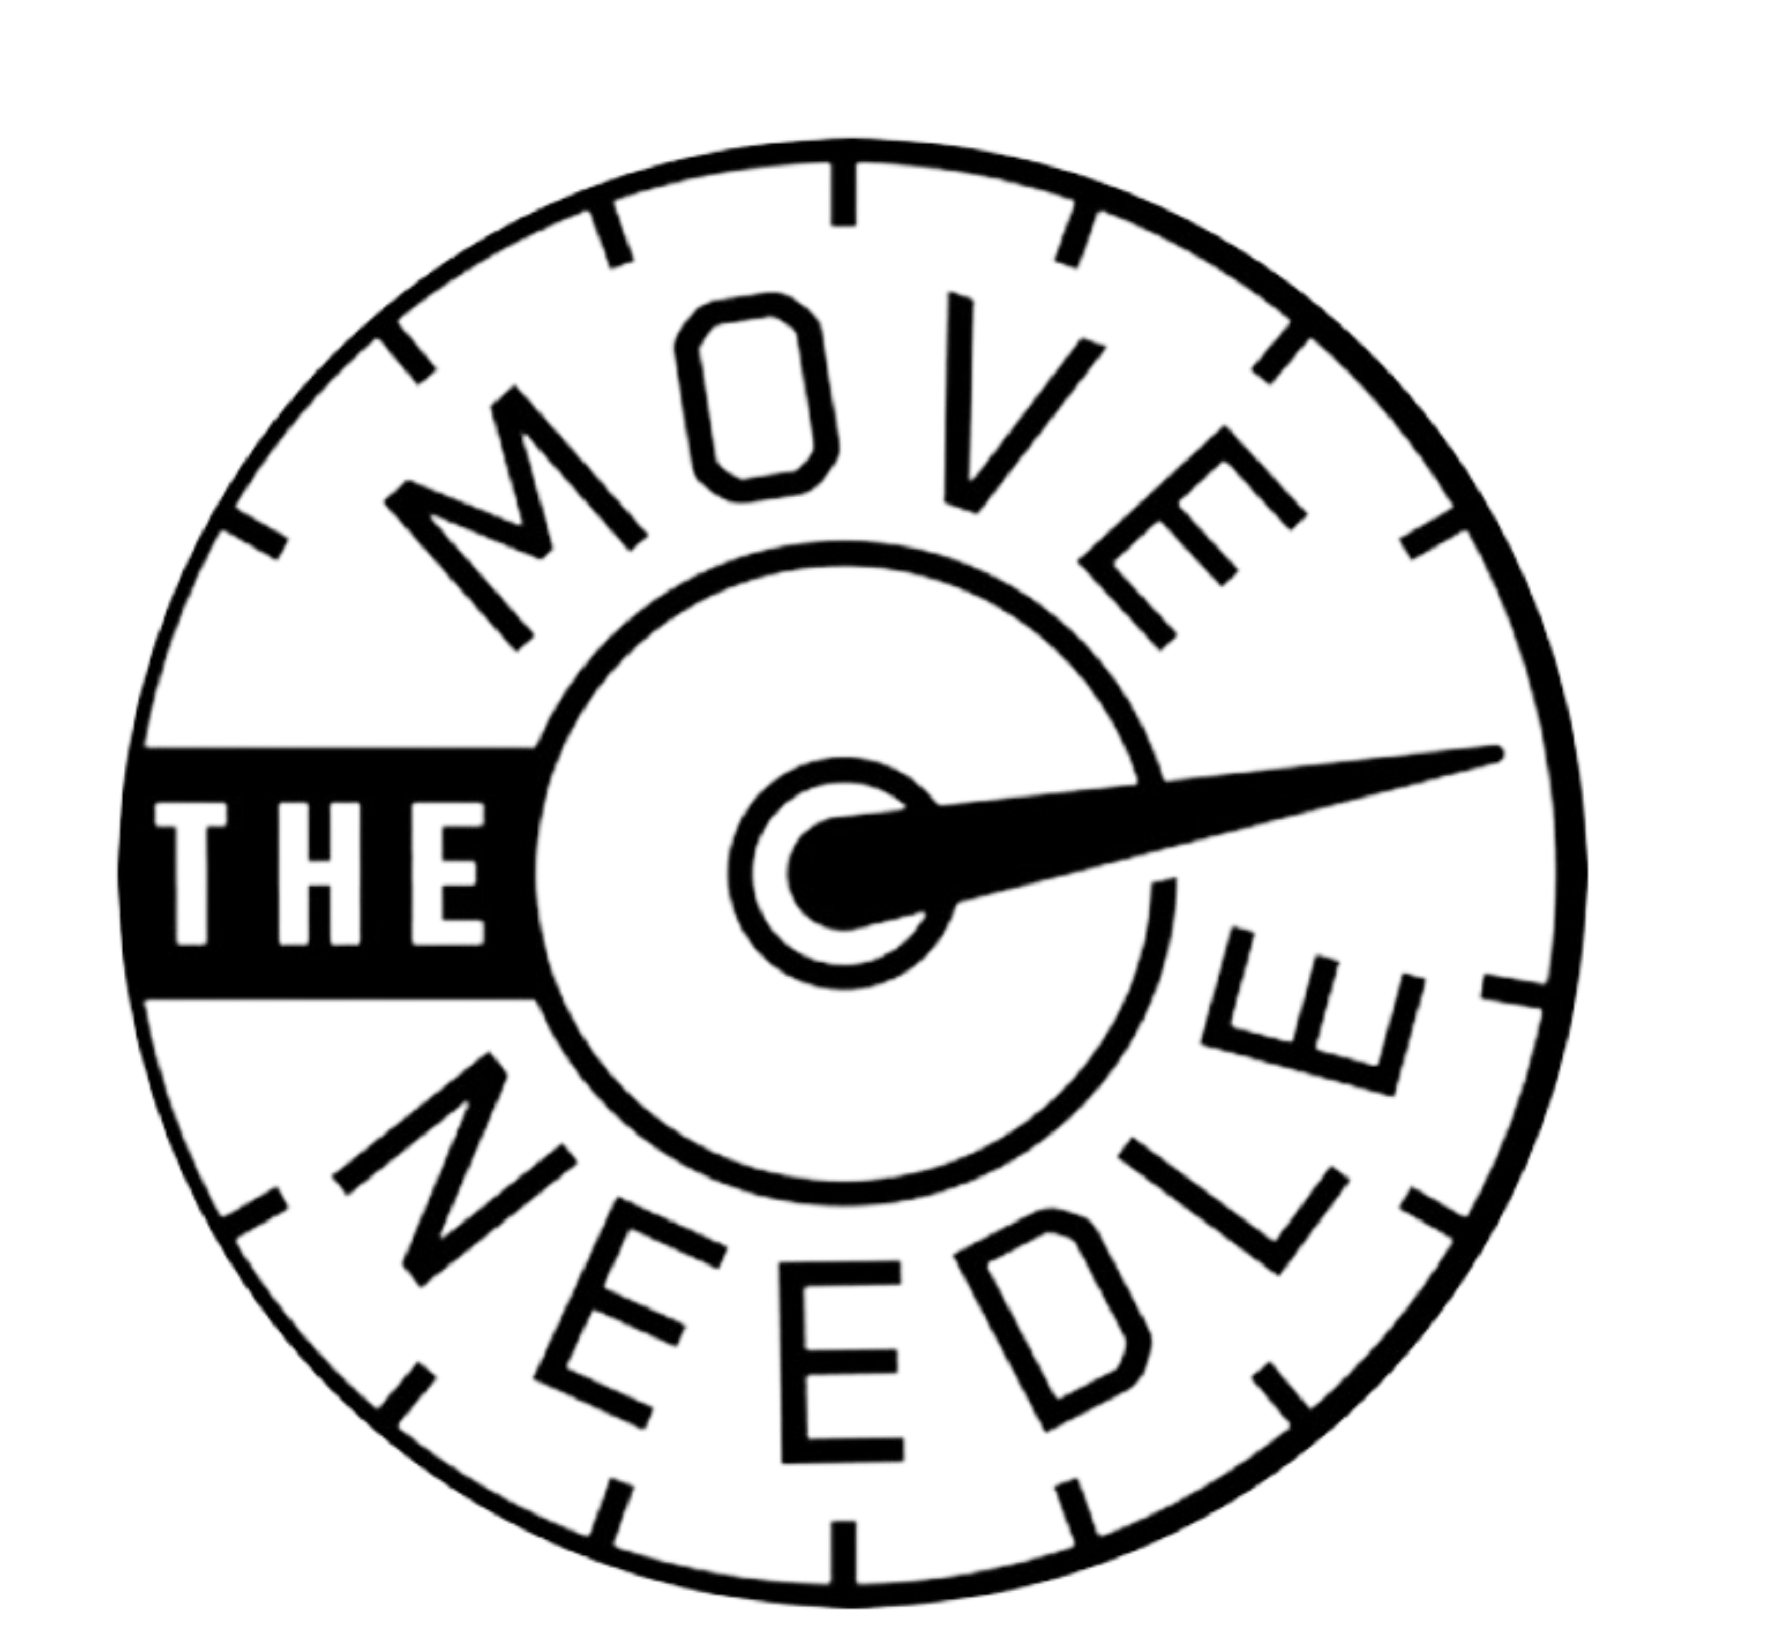 Move the Needle